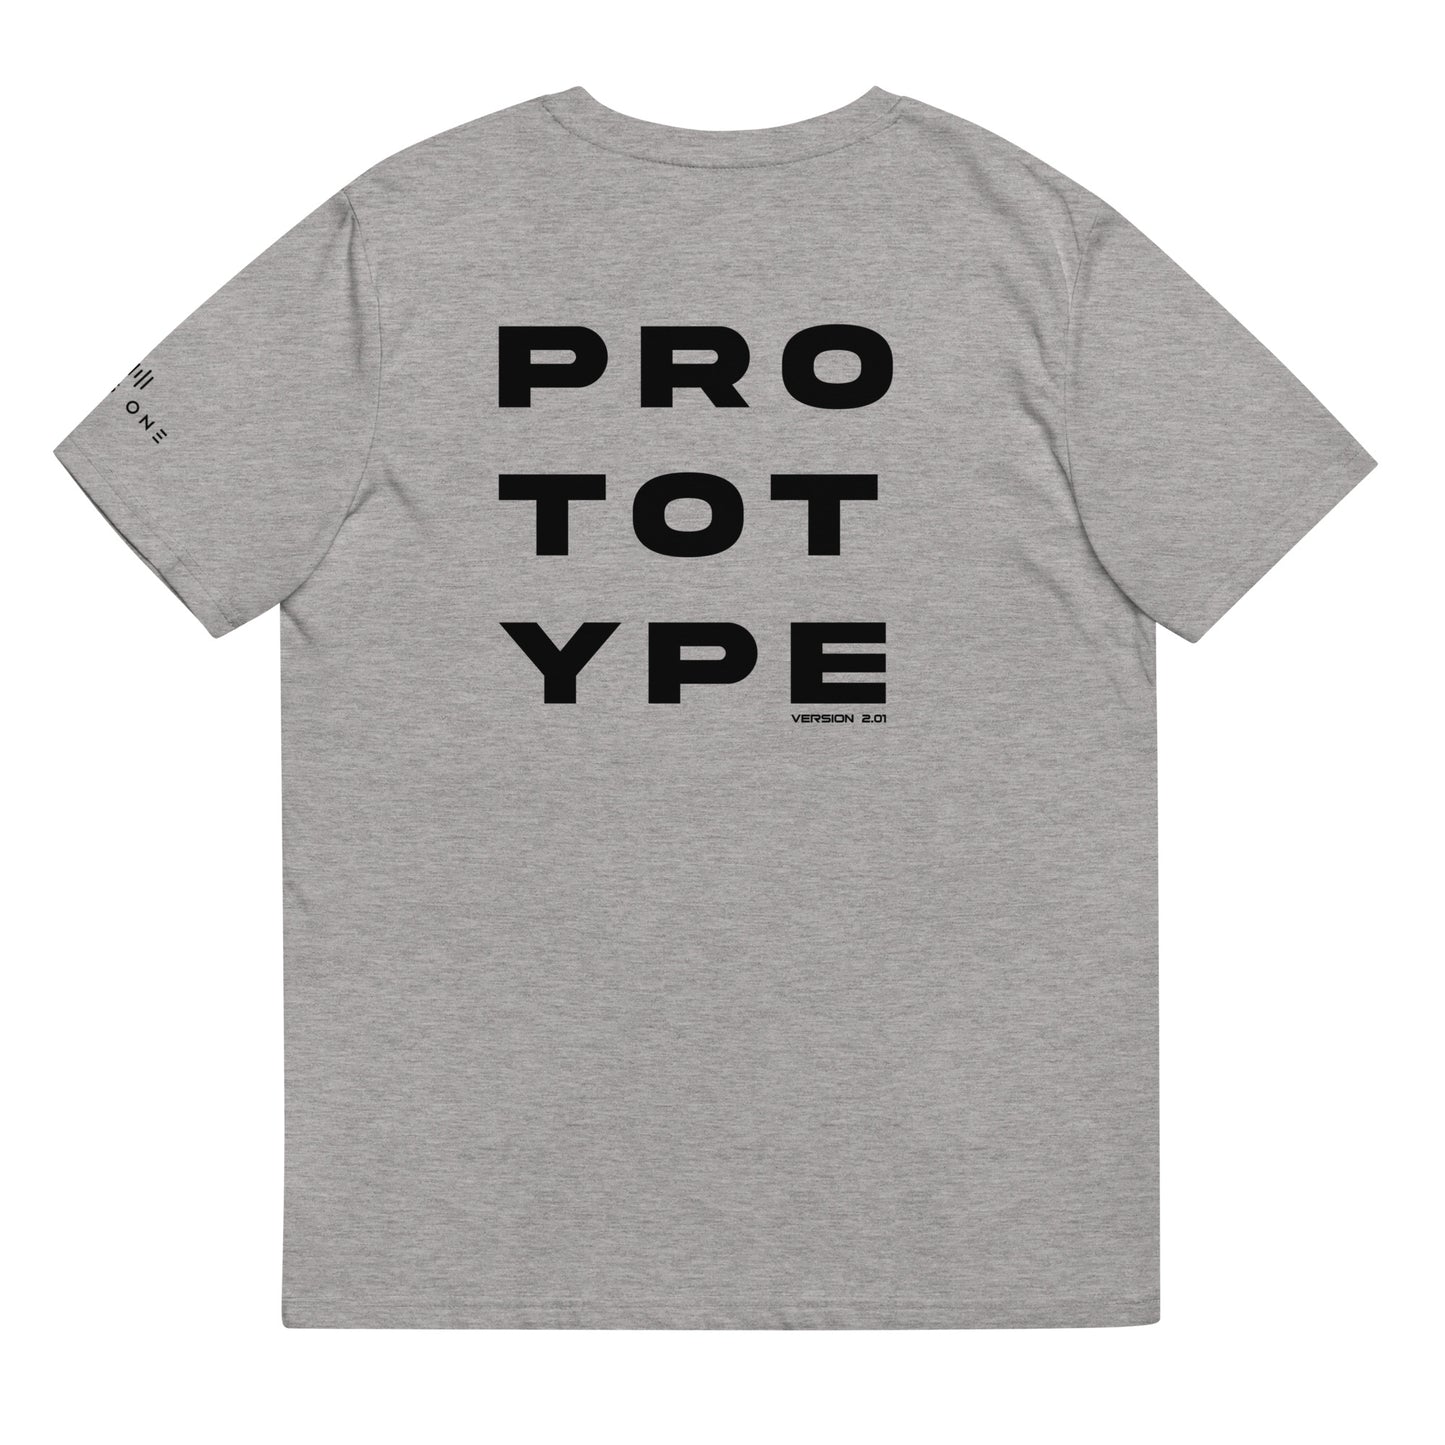 Prototype (v6) Unisex organic cotton t-shirt (Black Text)